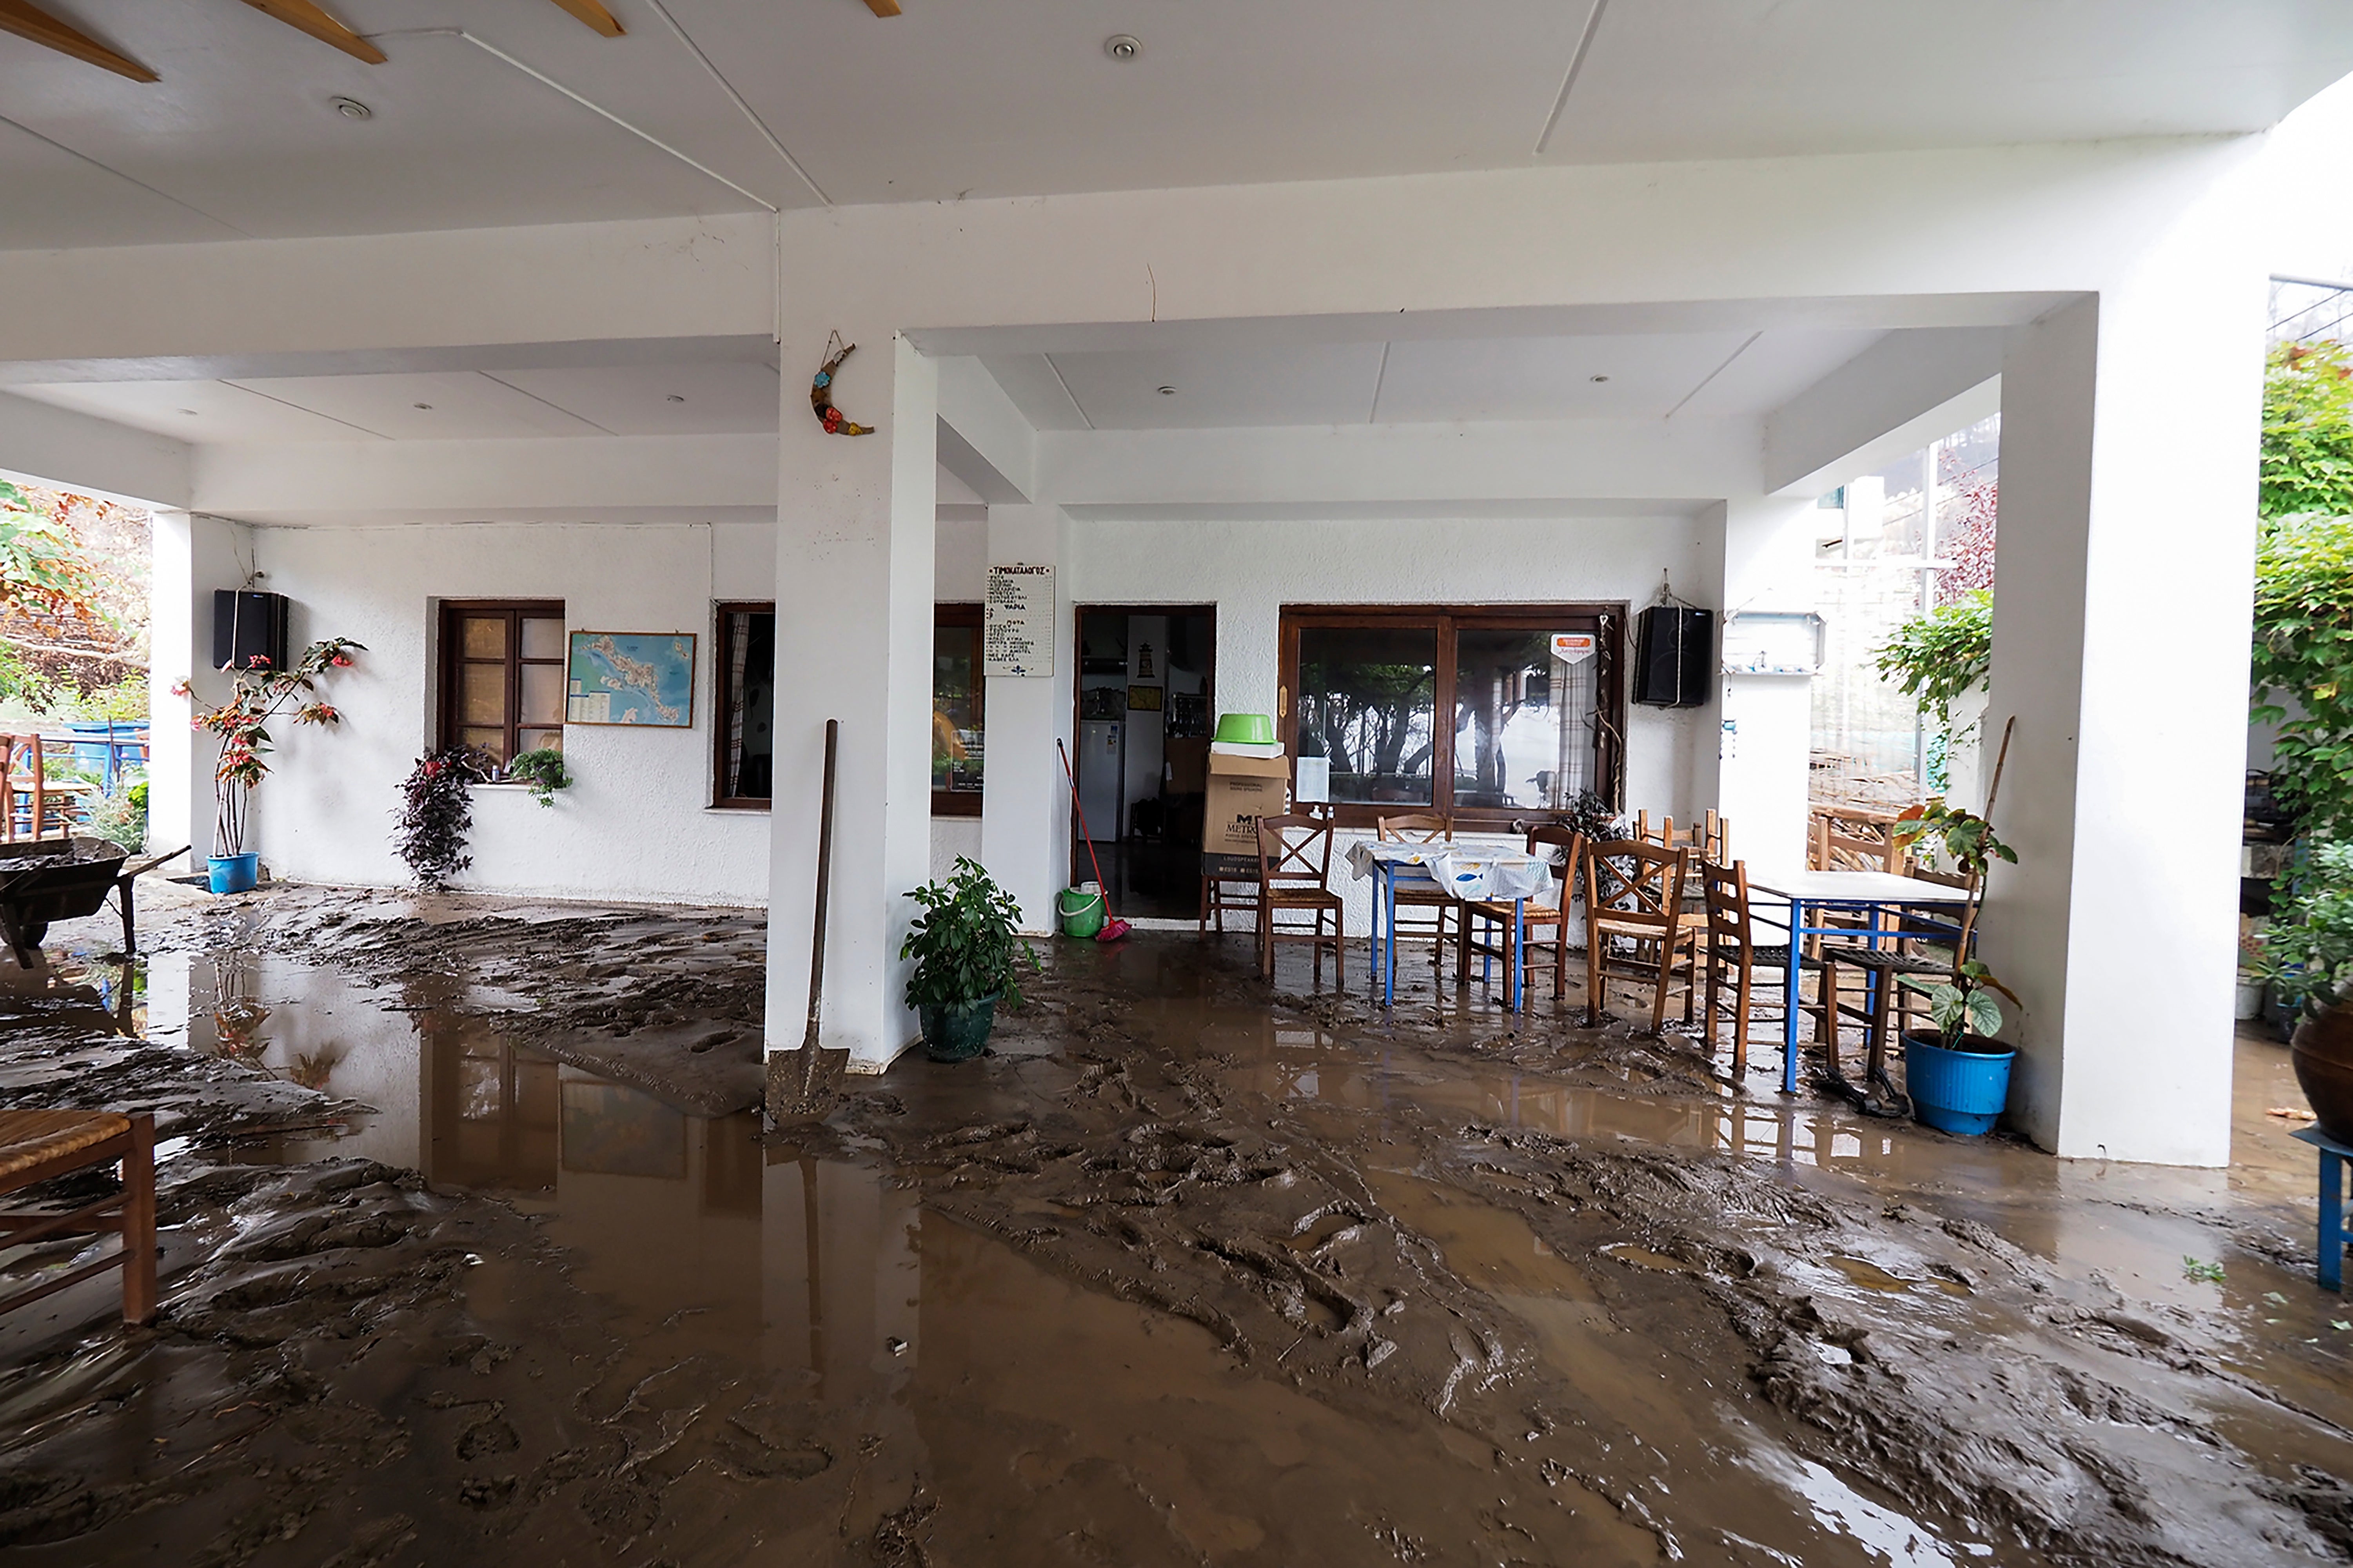 Greece Floods